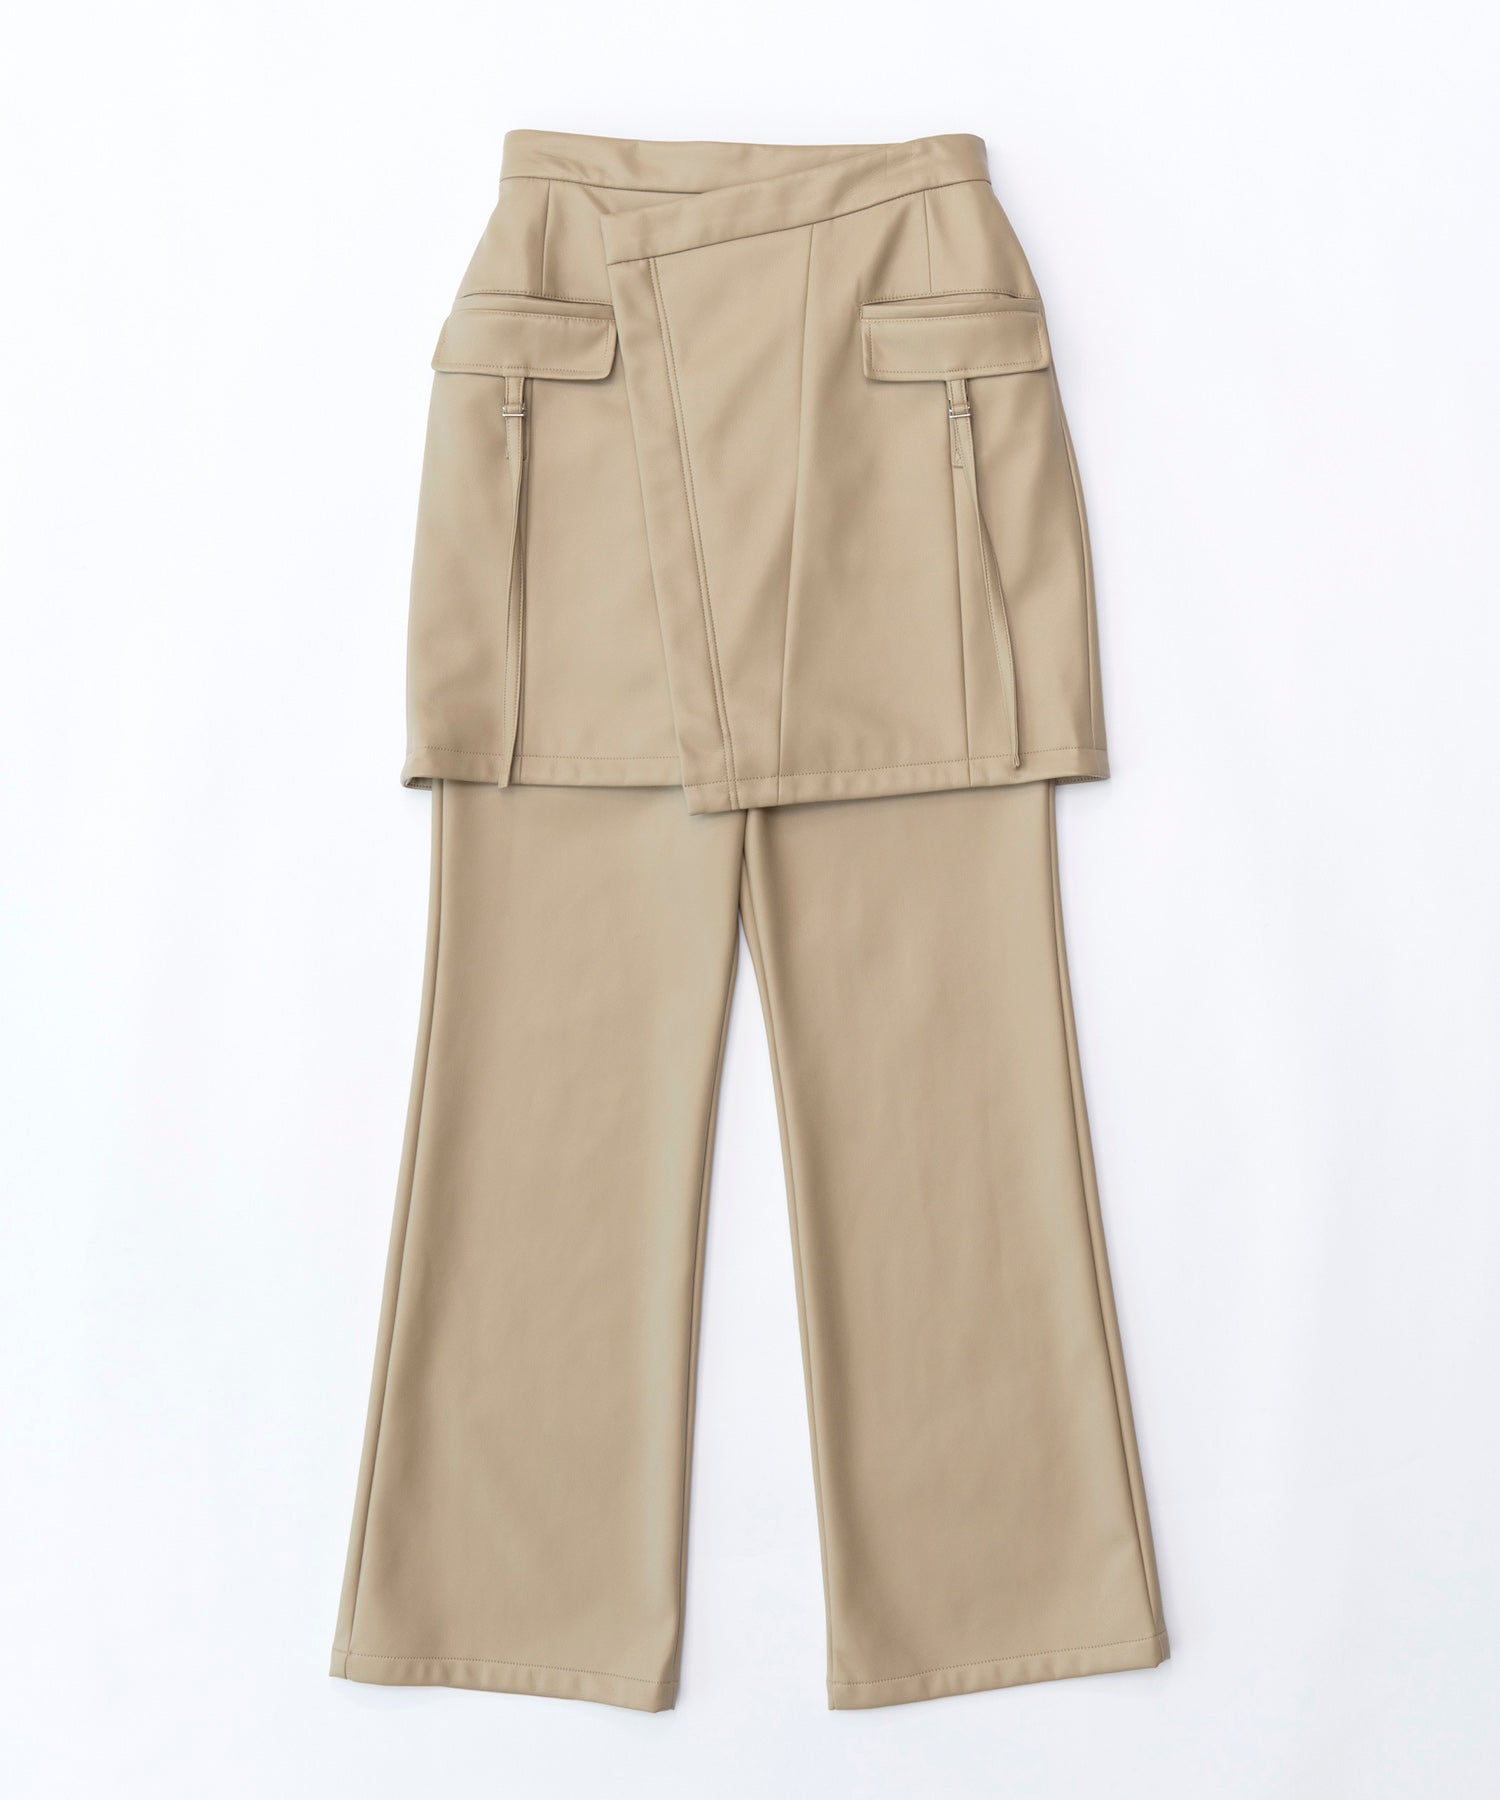 Skirt Layered Leather Pants